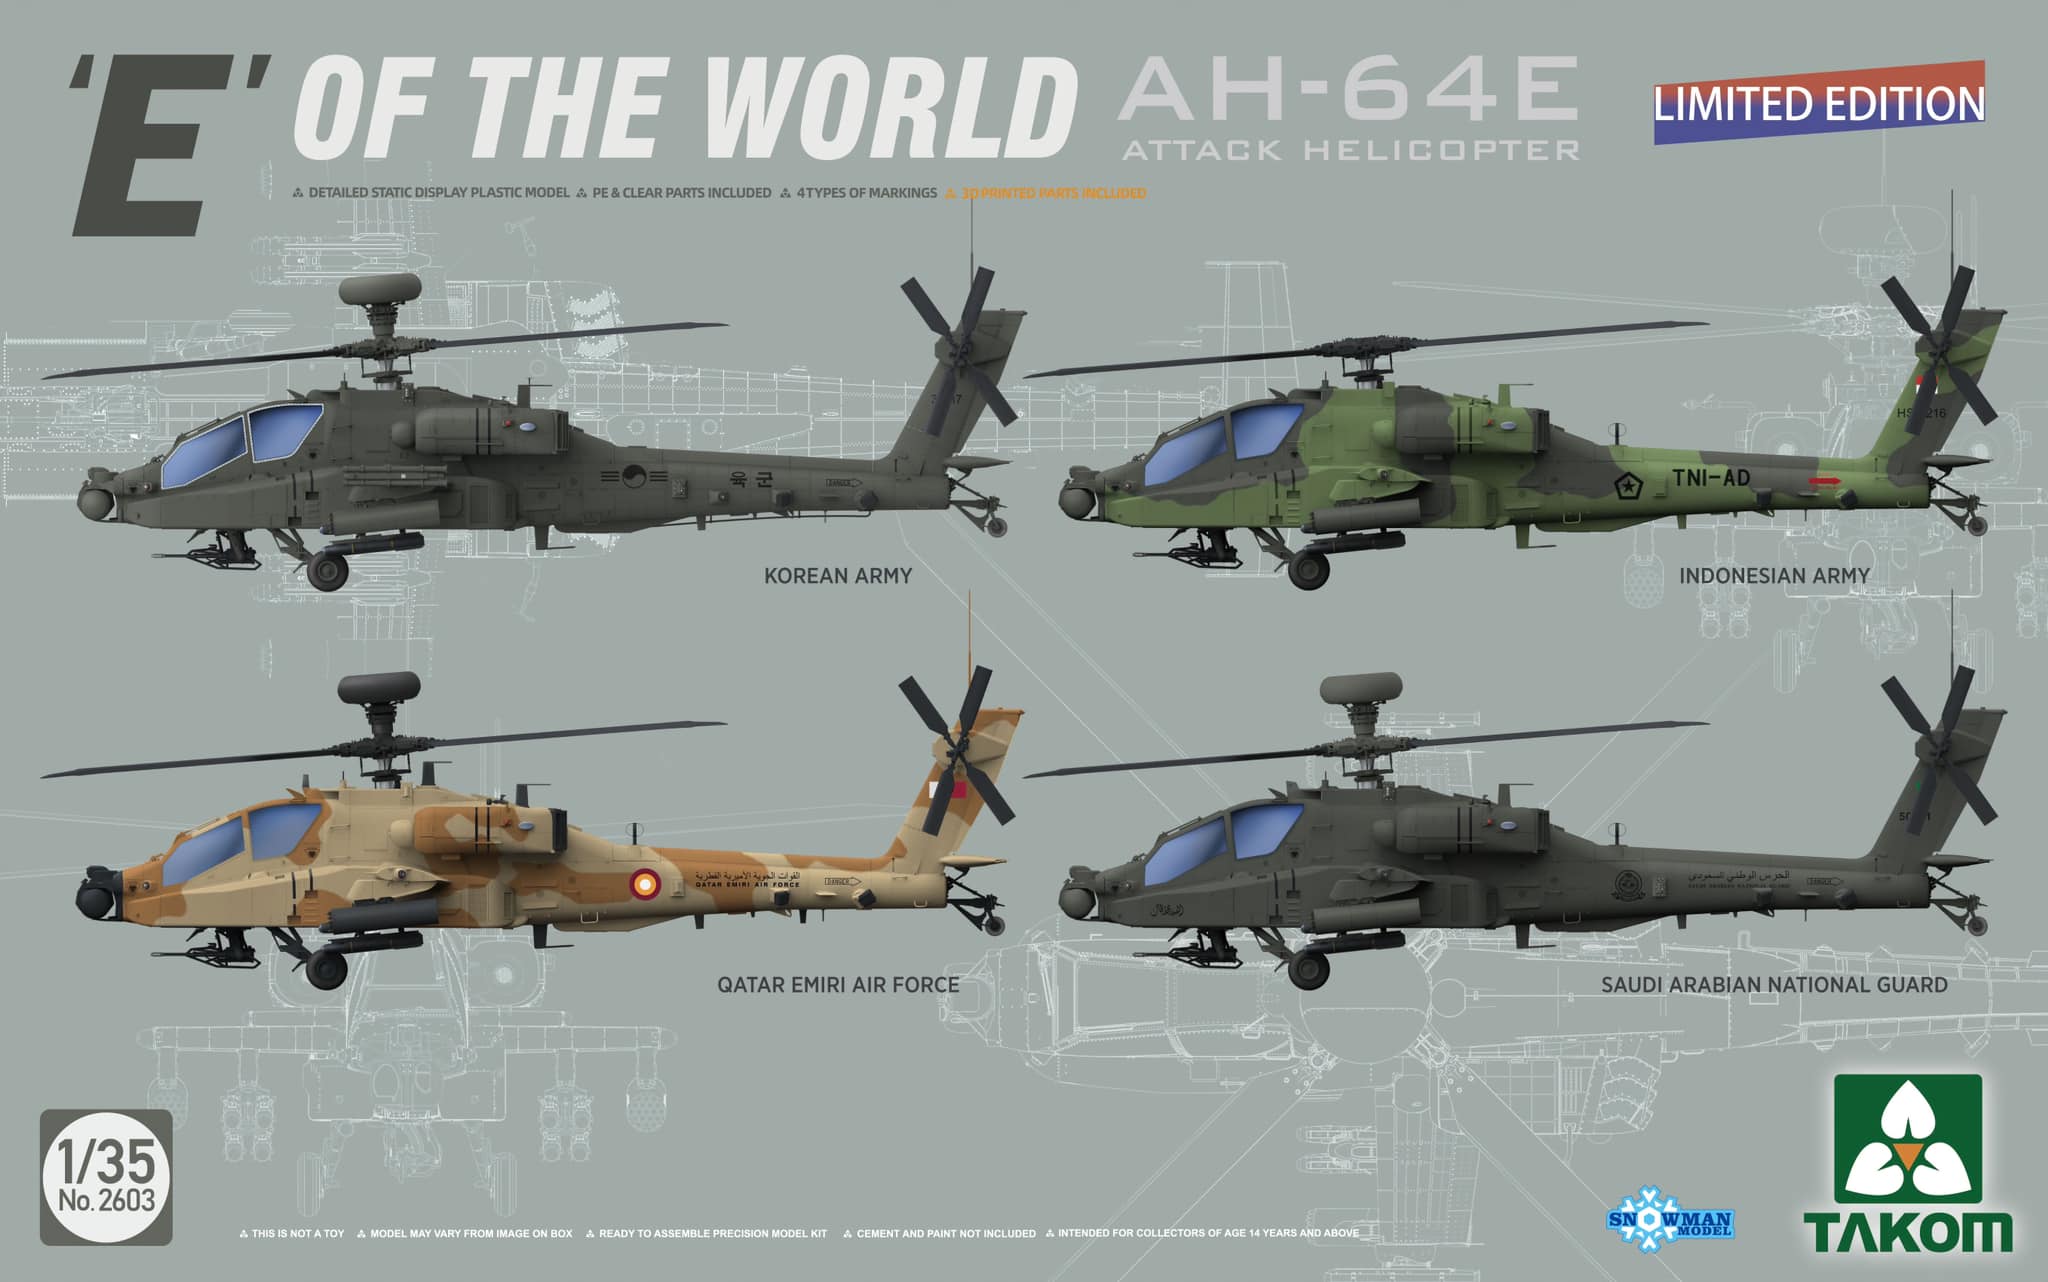 1/35 AH-64D アパッチ・ロングボウ 攻撃ヘリコプター タムタム